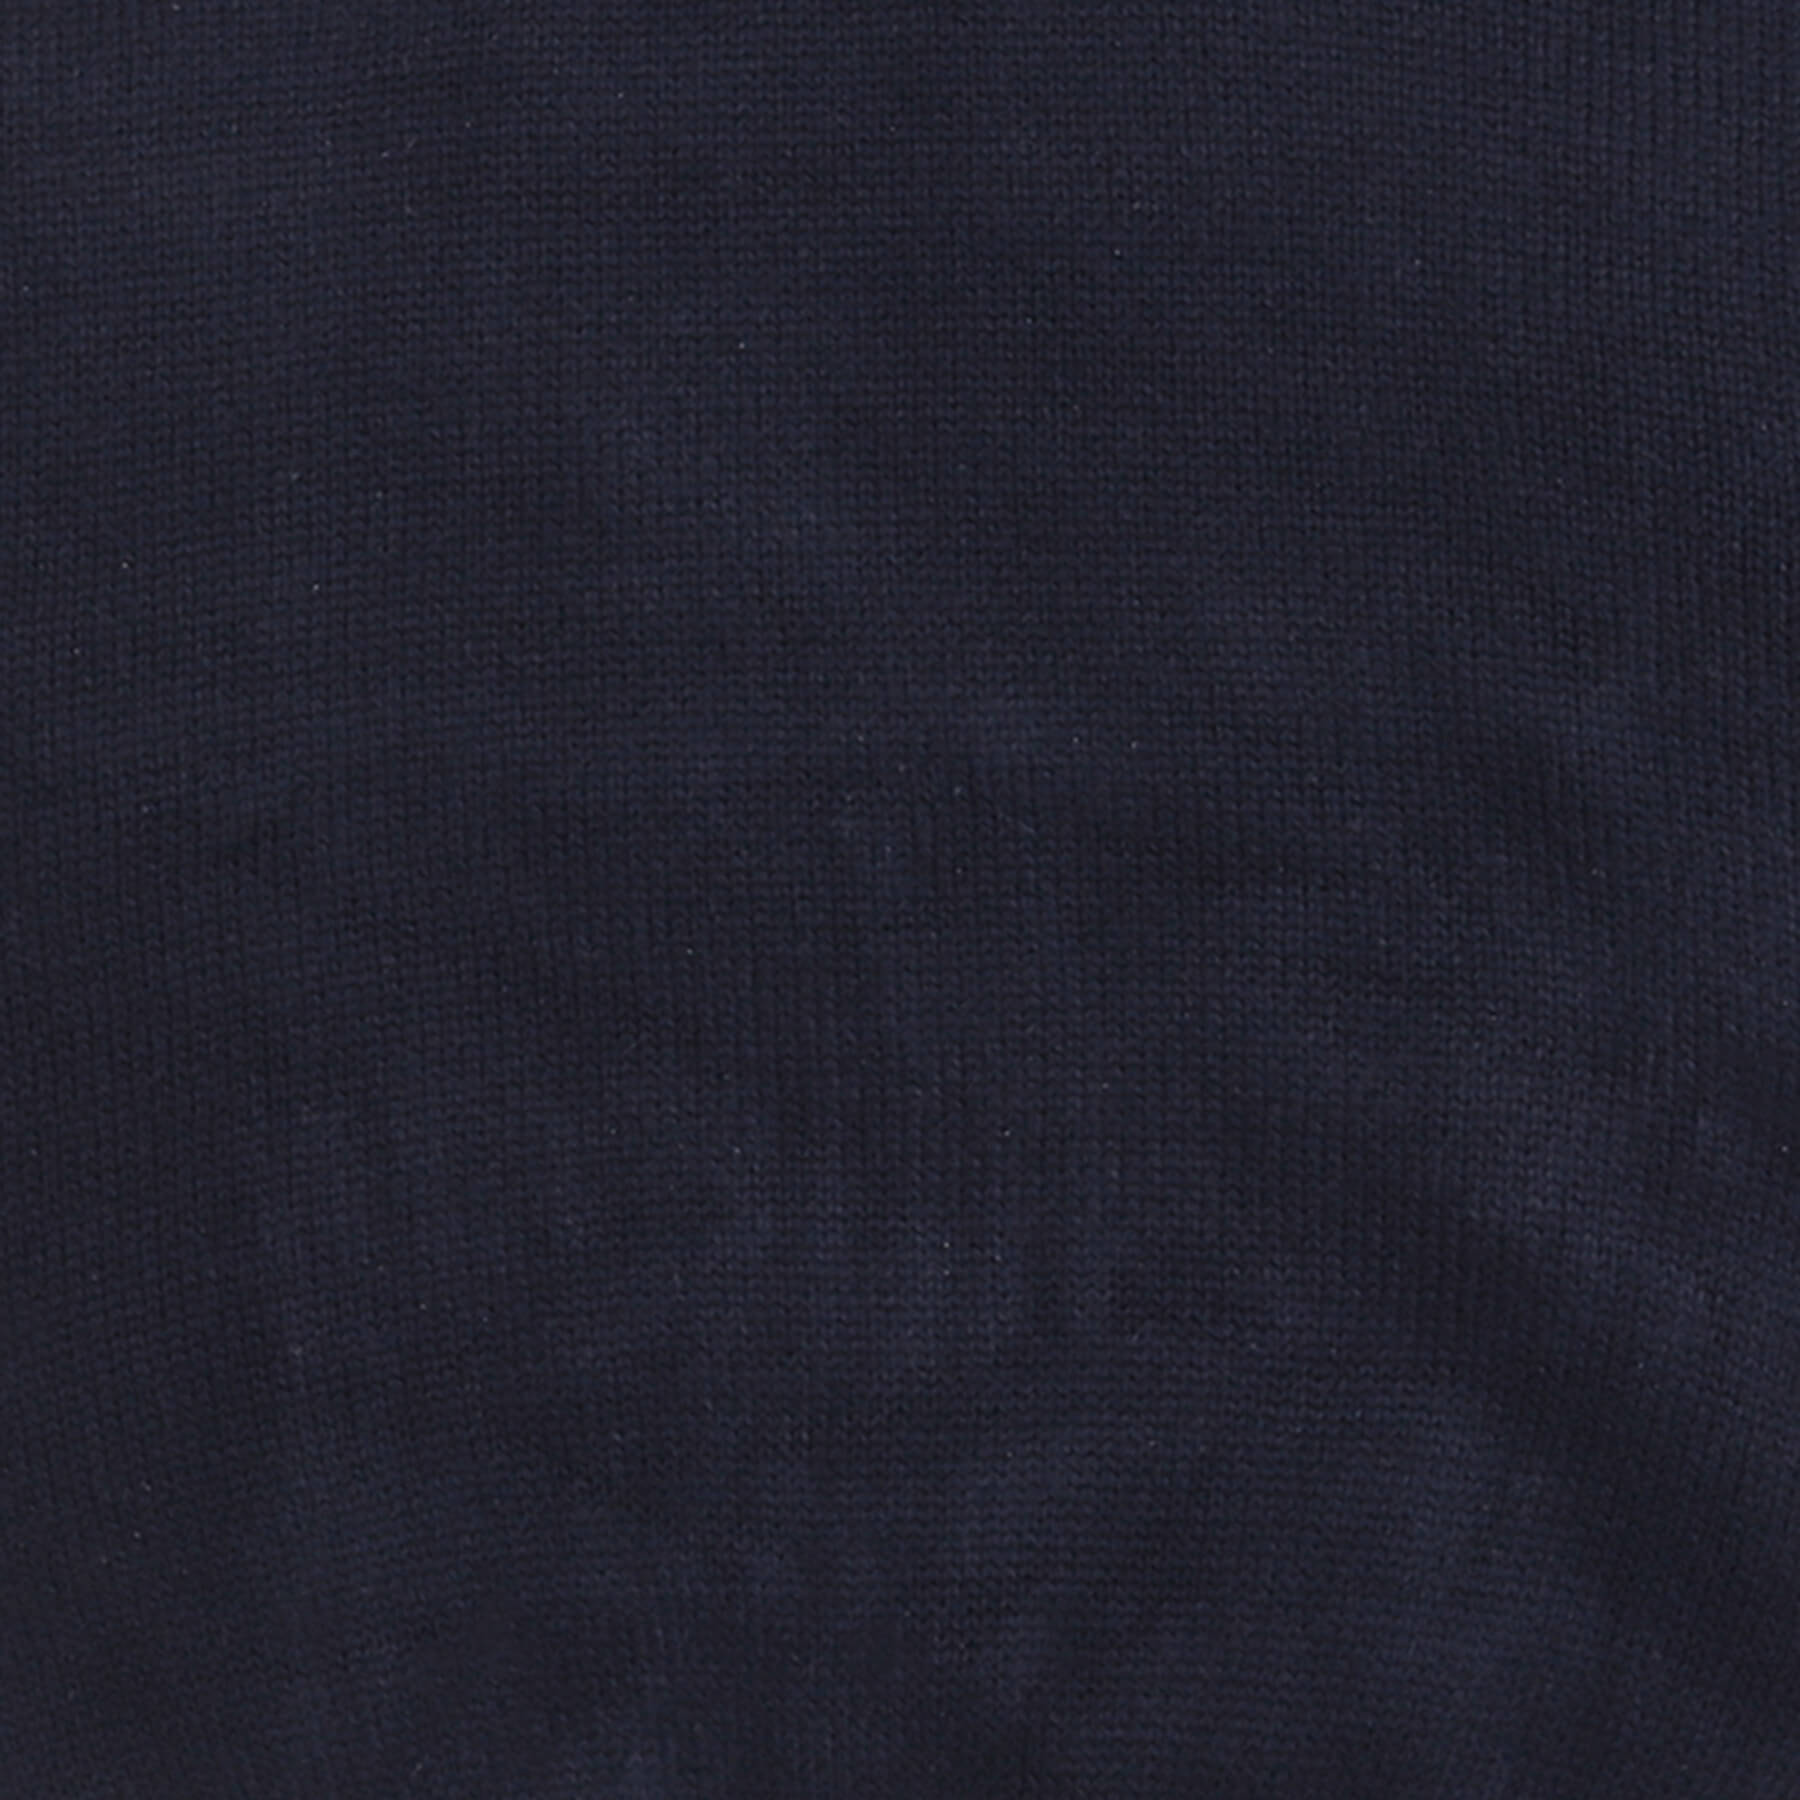 Taffykids full sleeves turtle neck plain knitted sweater-Navy